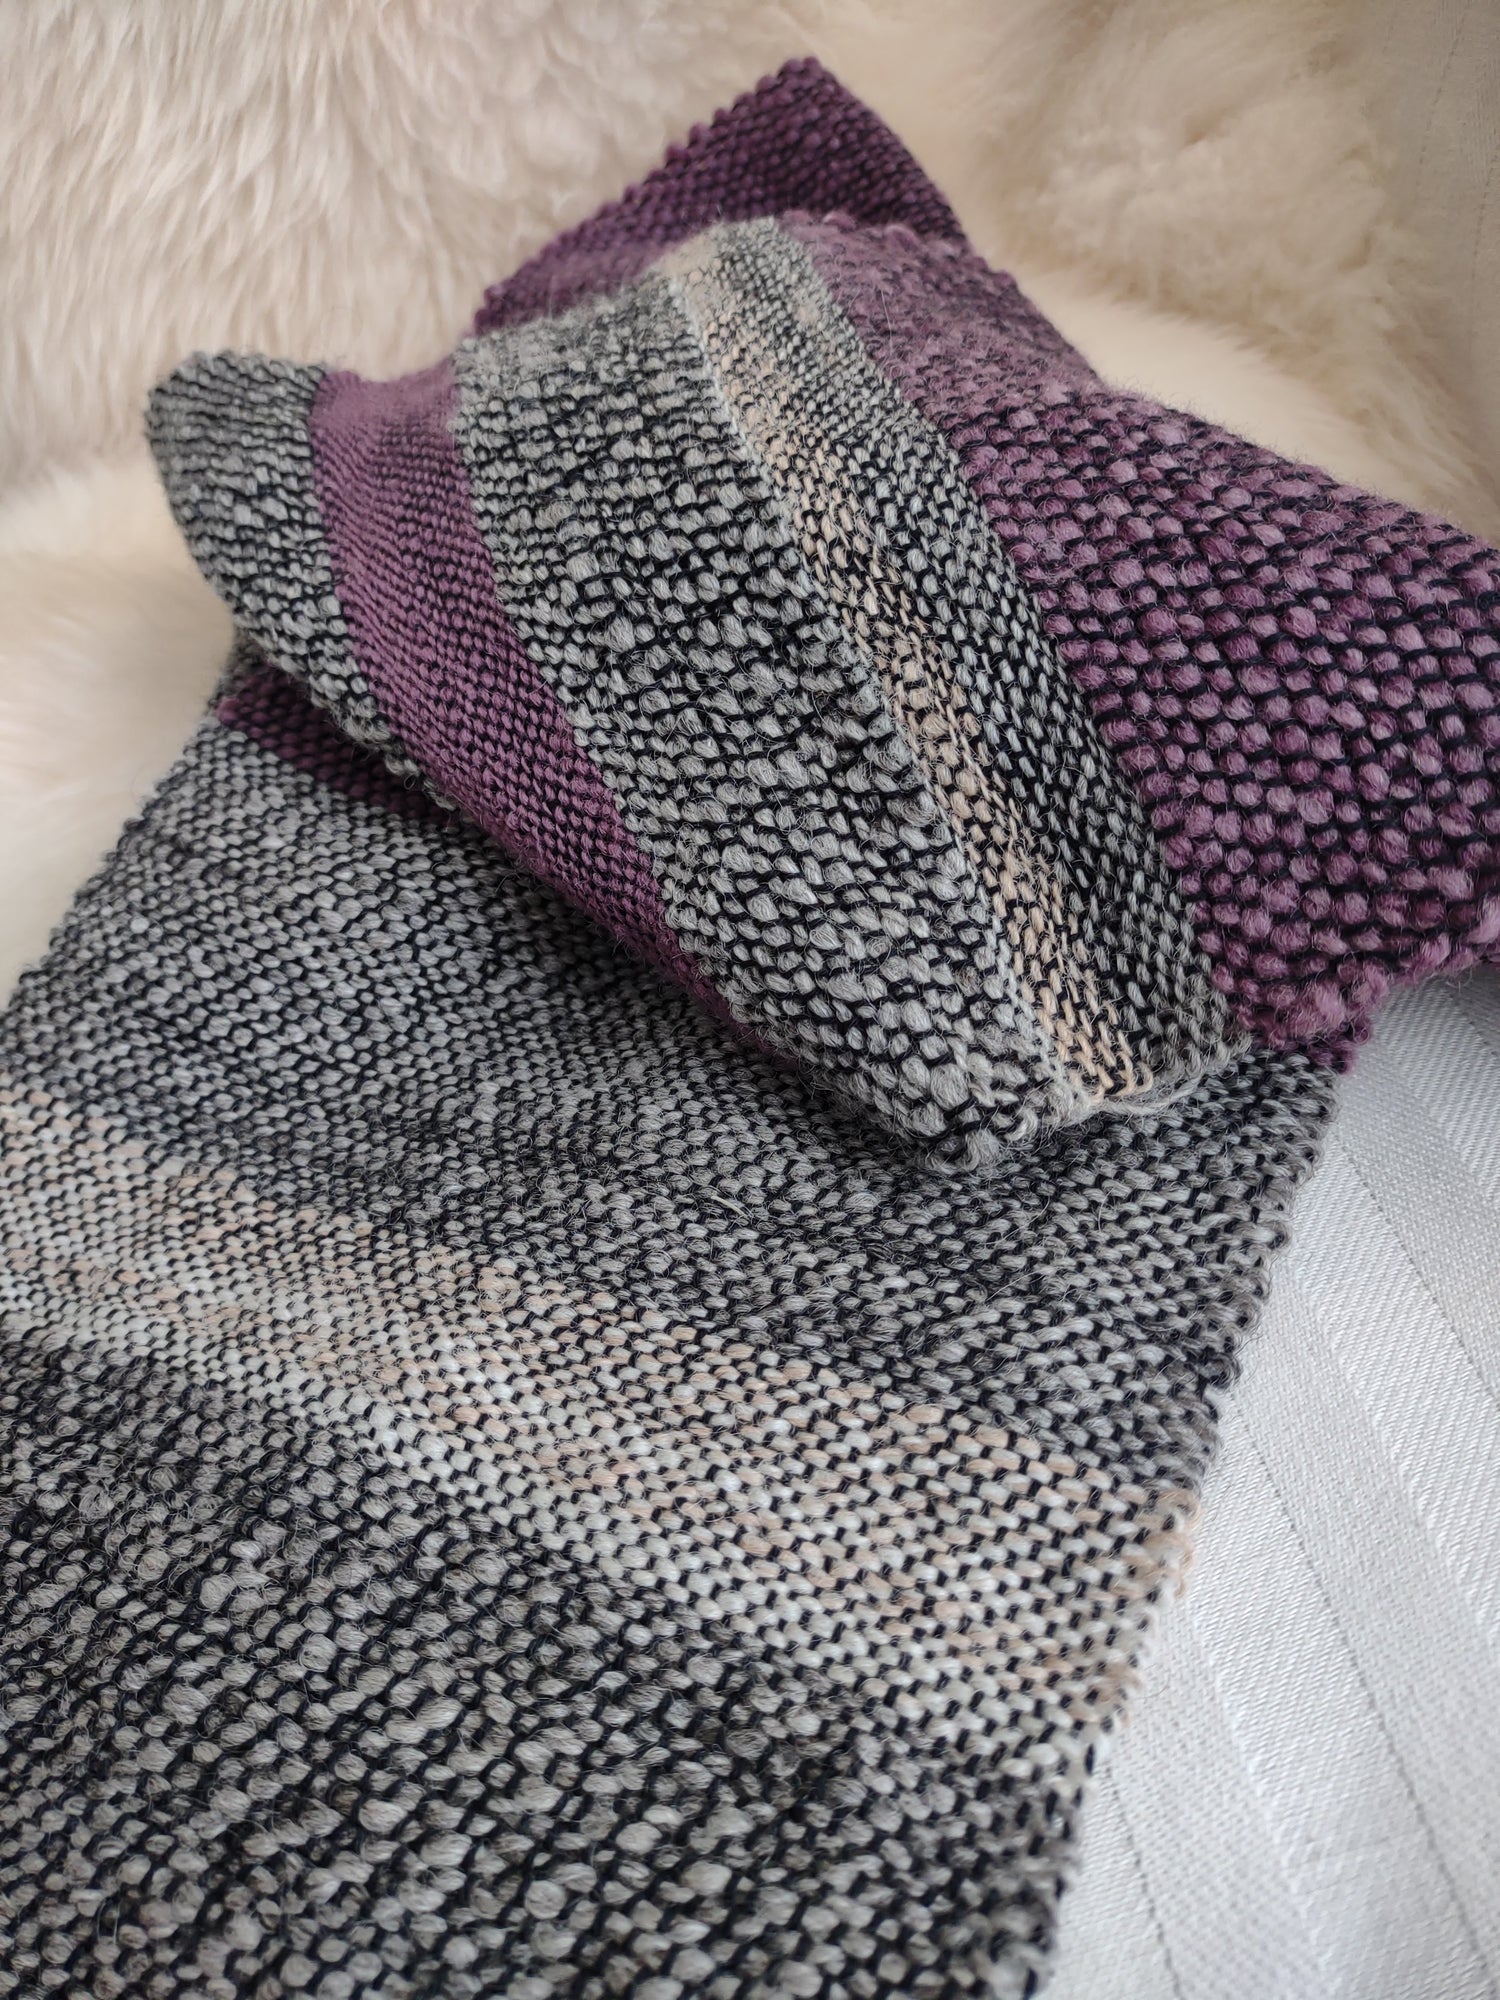 Handspun yarn, handwoven scarf with Merino, Corriedale and alpaca